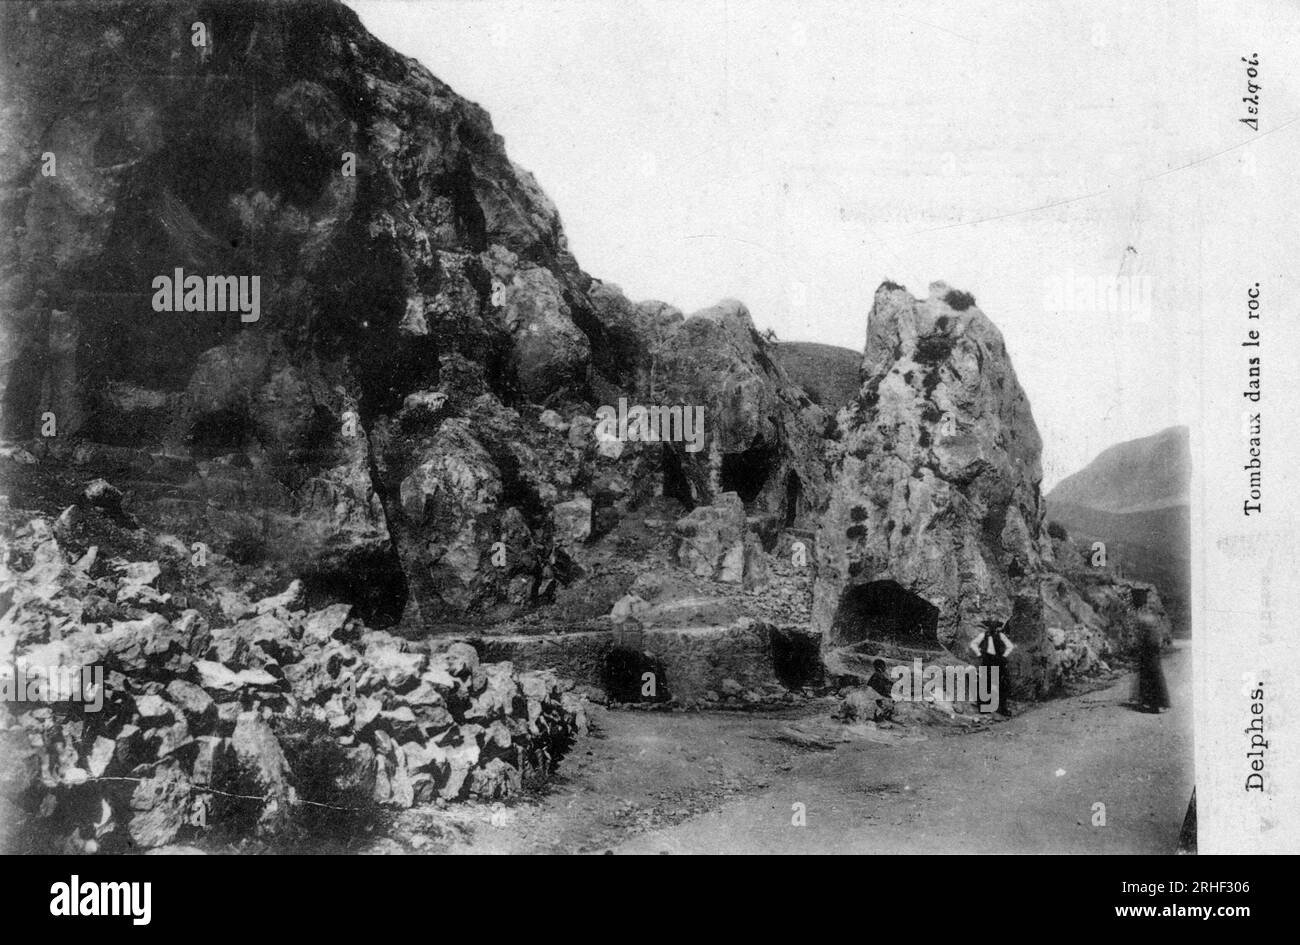 GRECE, Delphes : Tombeaux dans le roc - Carte postale fin 19eme-20eme Siecle Stockfoto